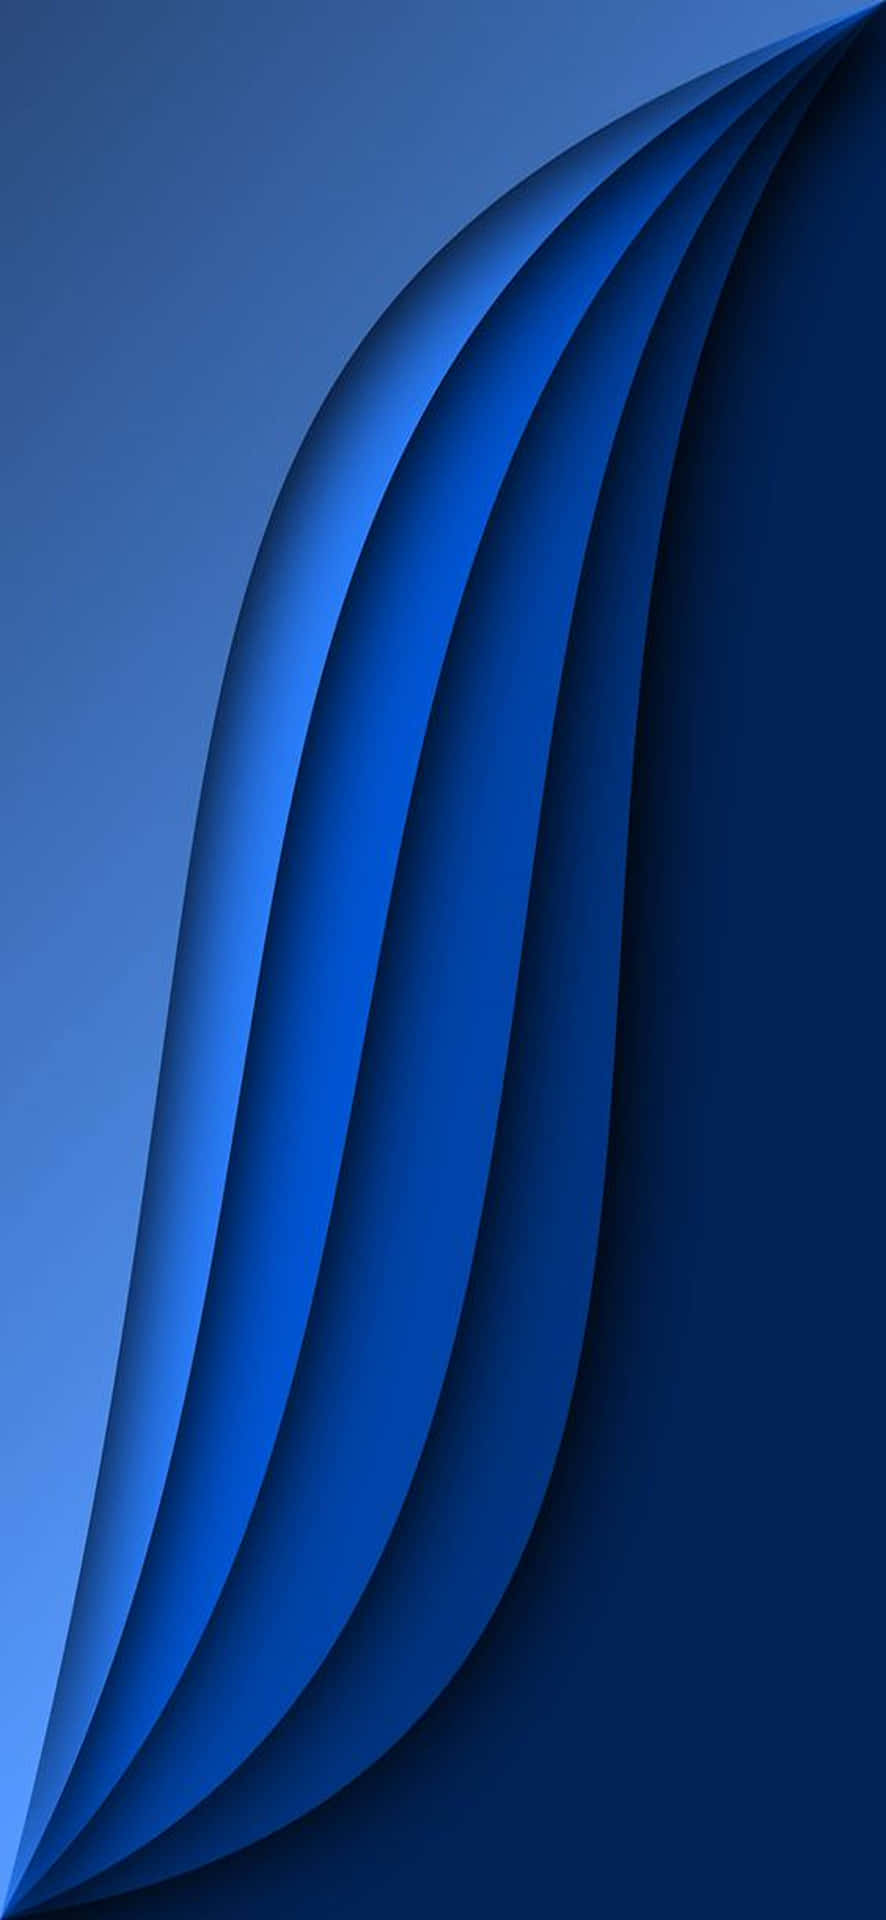 Unpatrón Abstracto Con Tonalidades De Azul Y Violeta Frescas. Fondo de pantalla